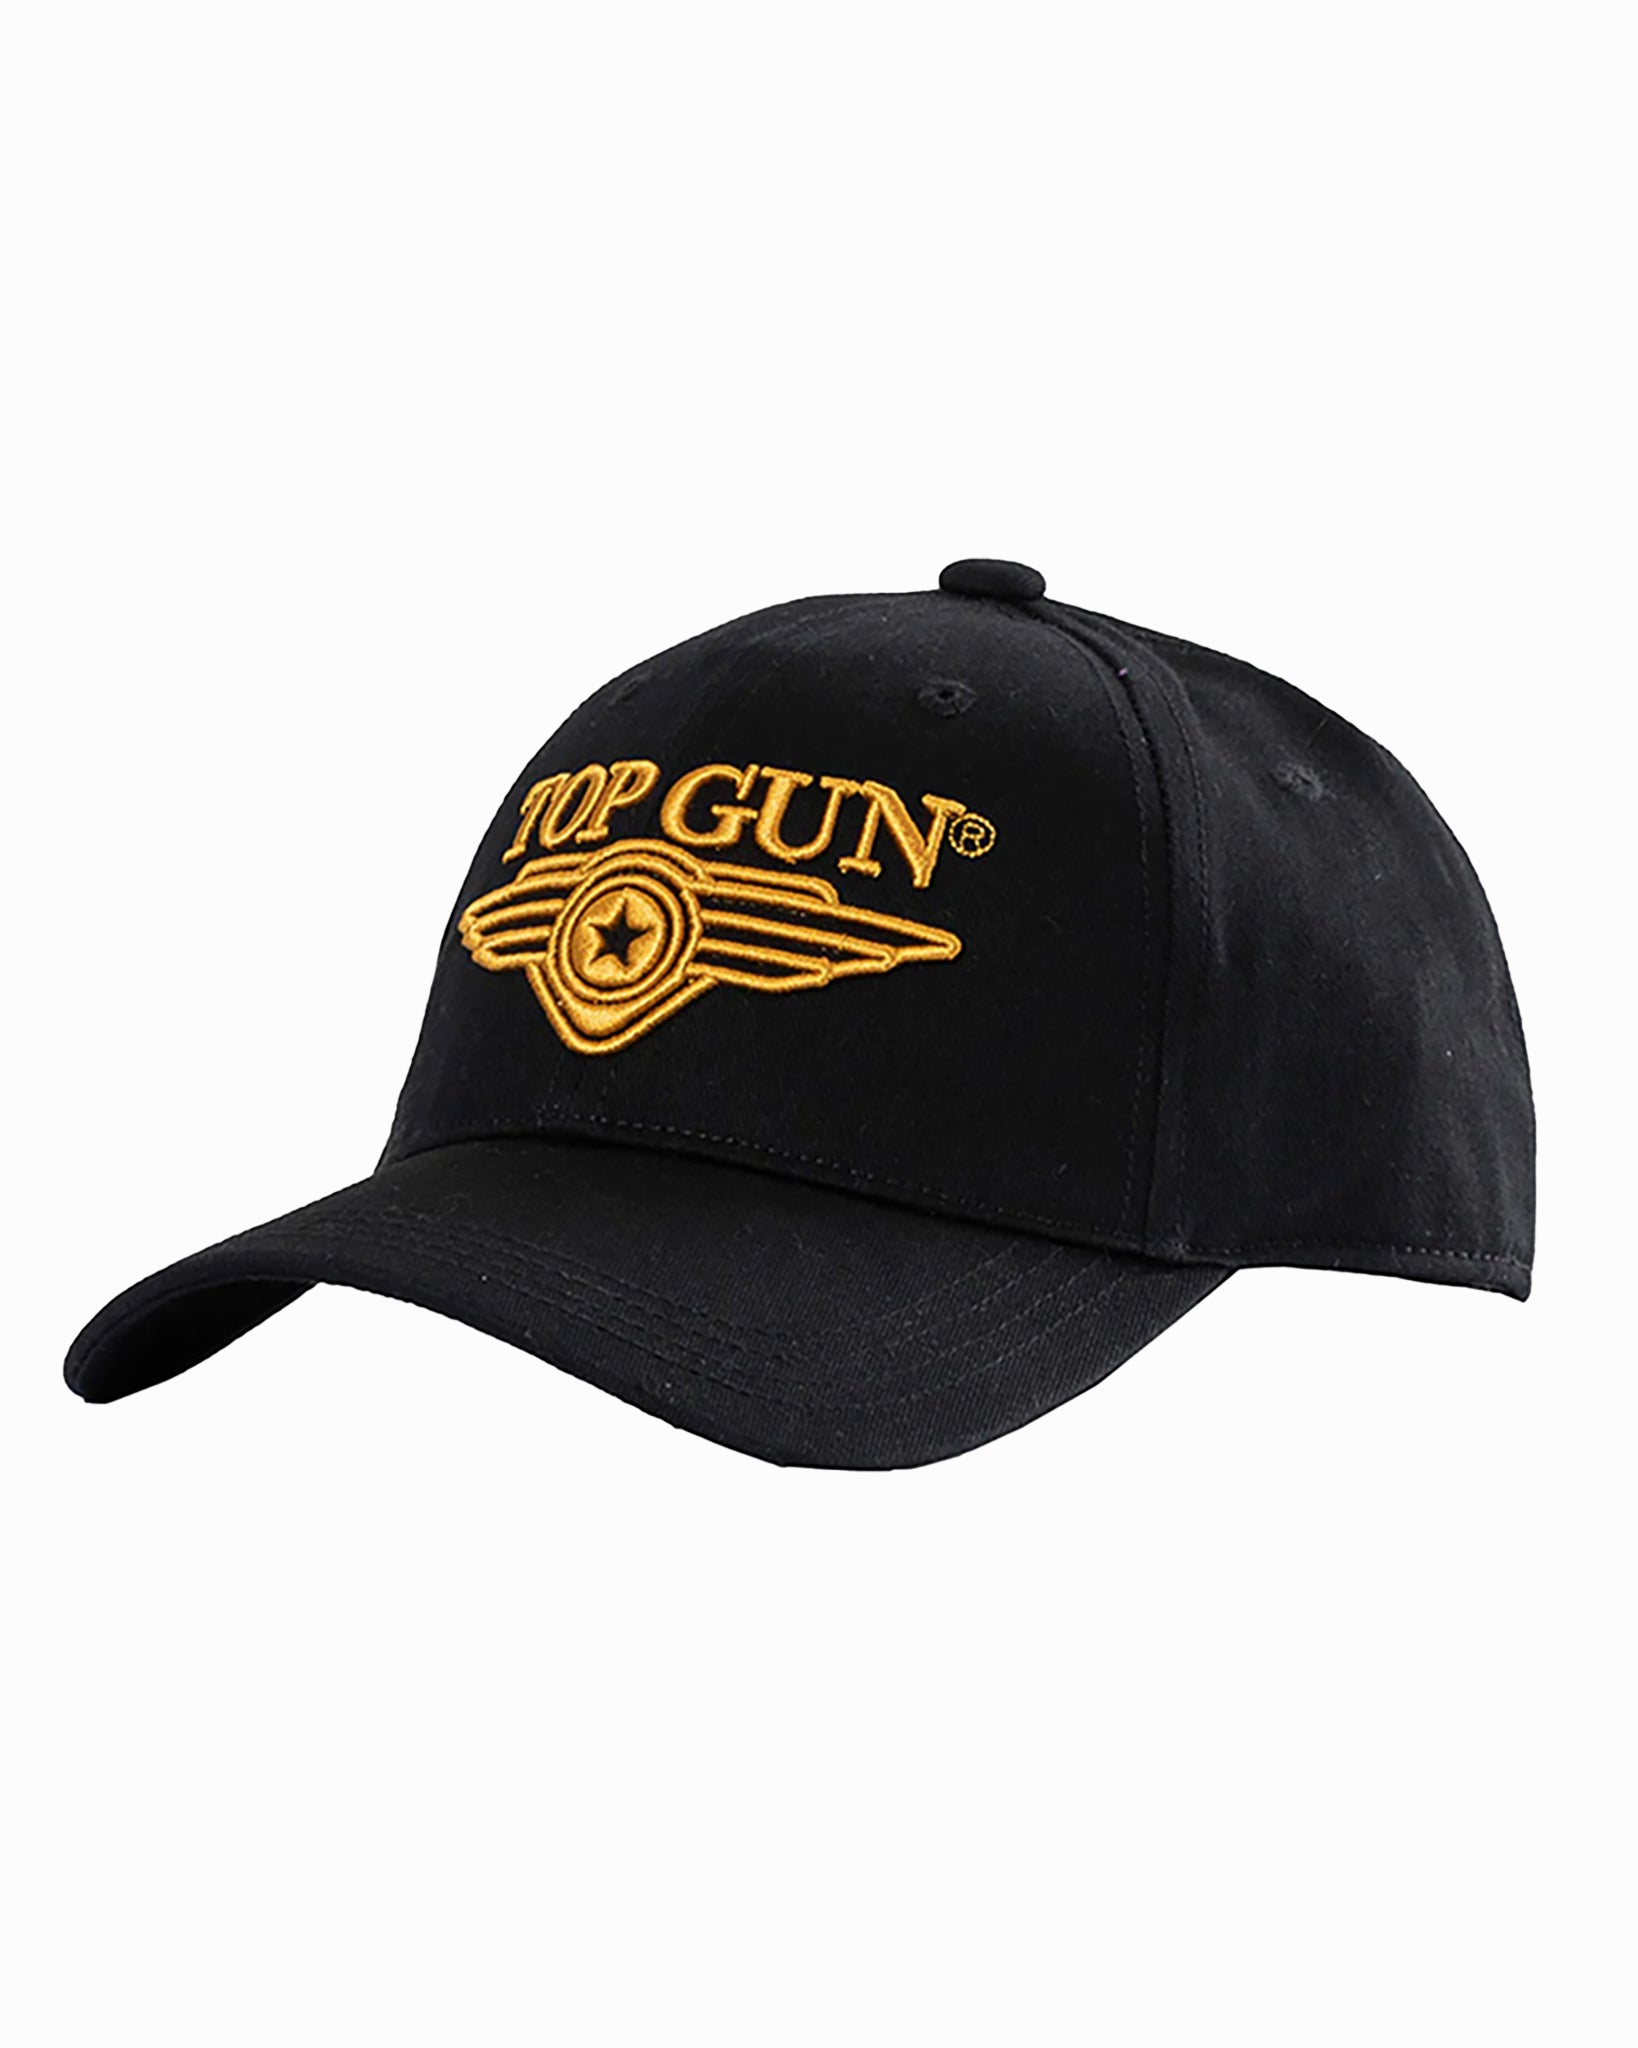 – Store LOGO GUN® 3D TOP Gun Top CAP